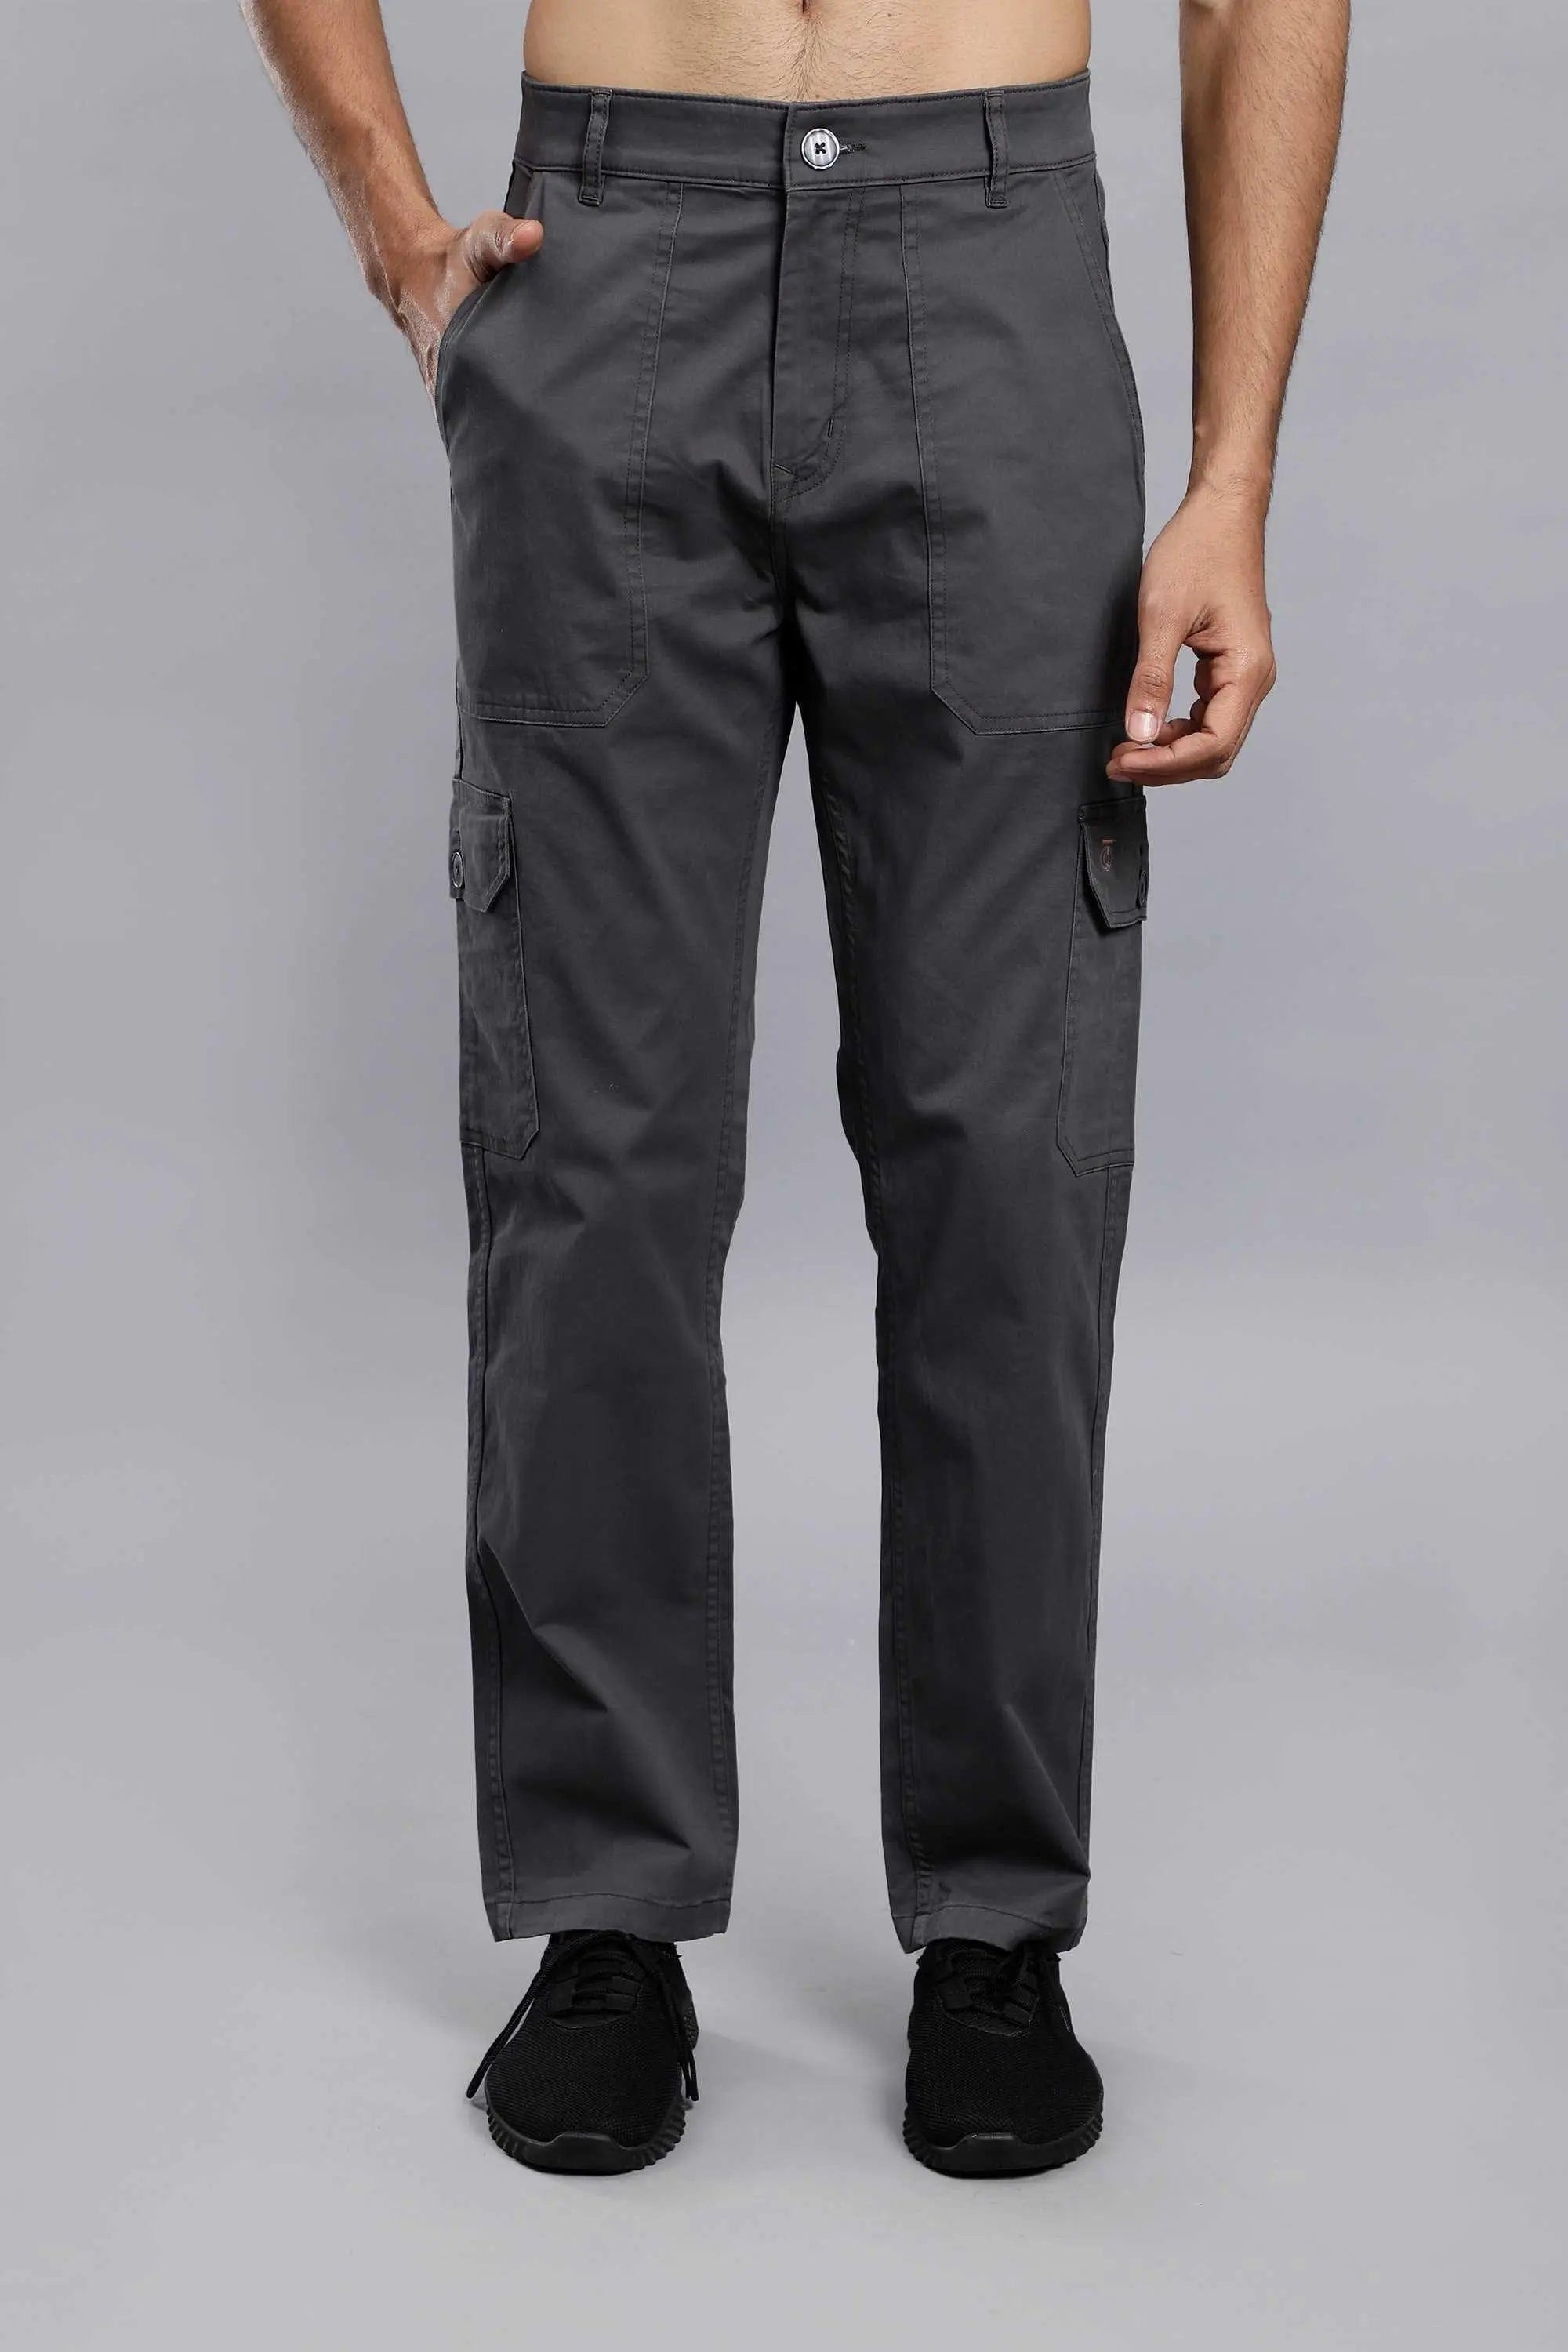 Men's Loose Fit Multiple Pockets Dark Grey Cargo Pant